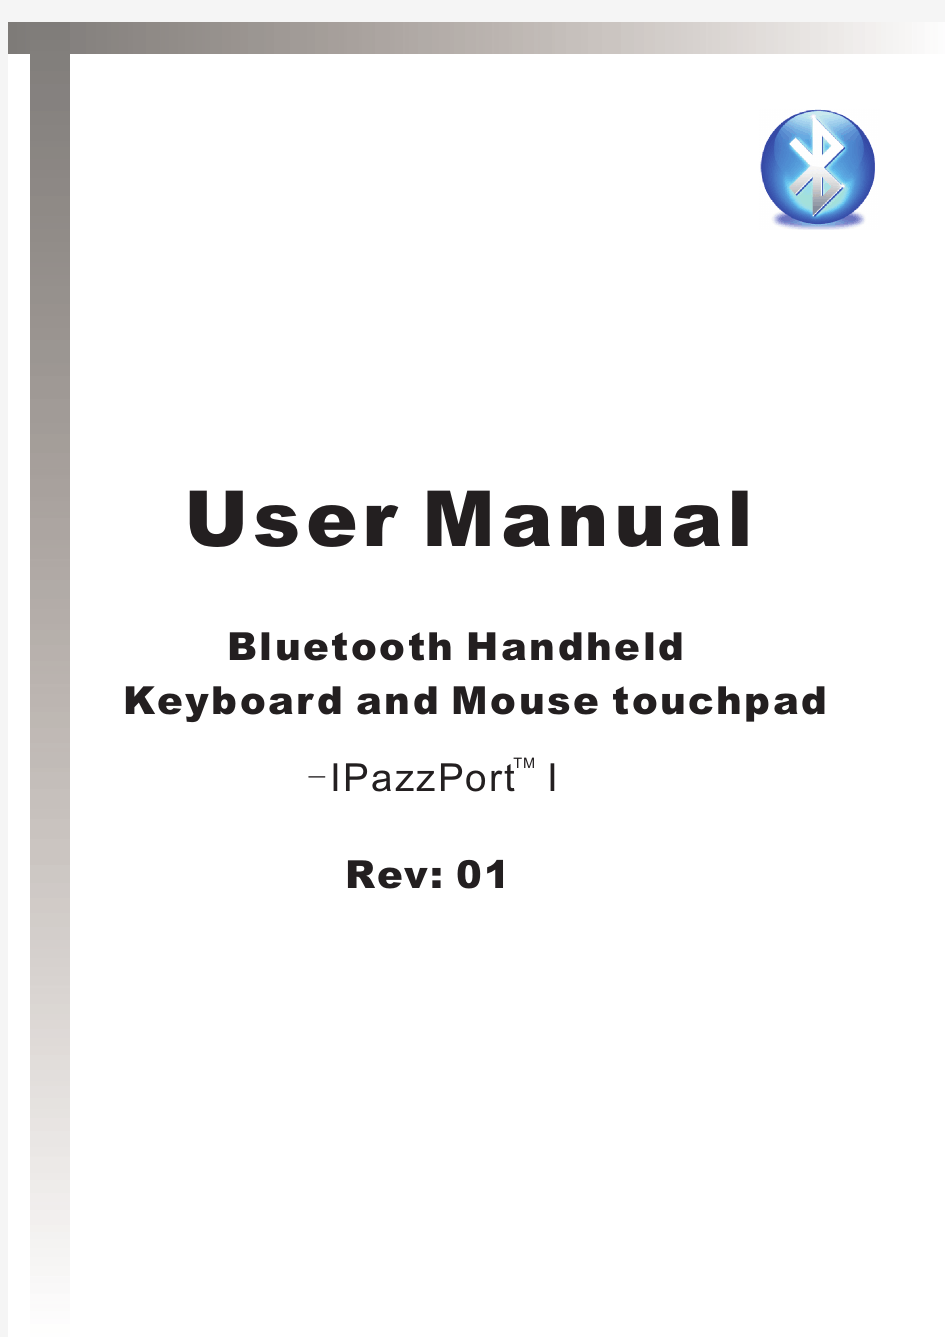 iPazzPort 蓝牙无线键盘触摸板 KP-810-02BTT 英文说明书